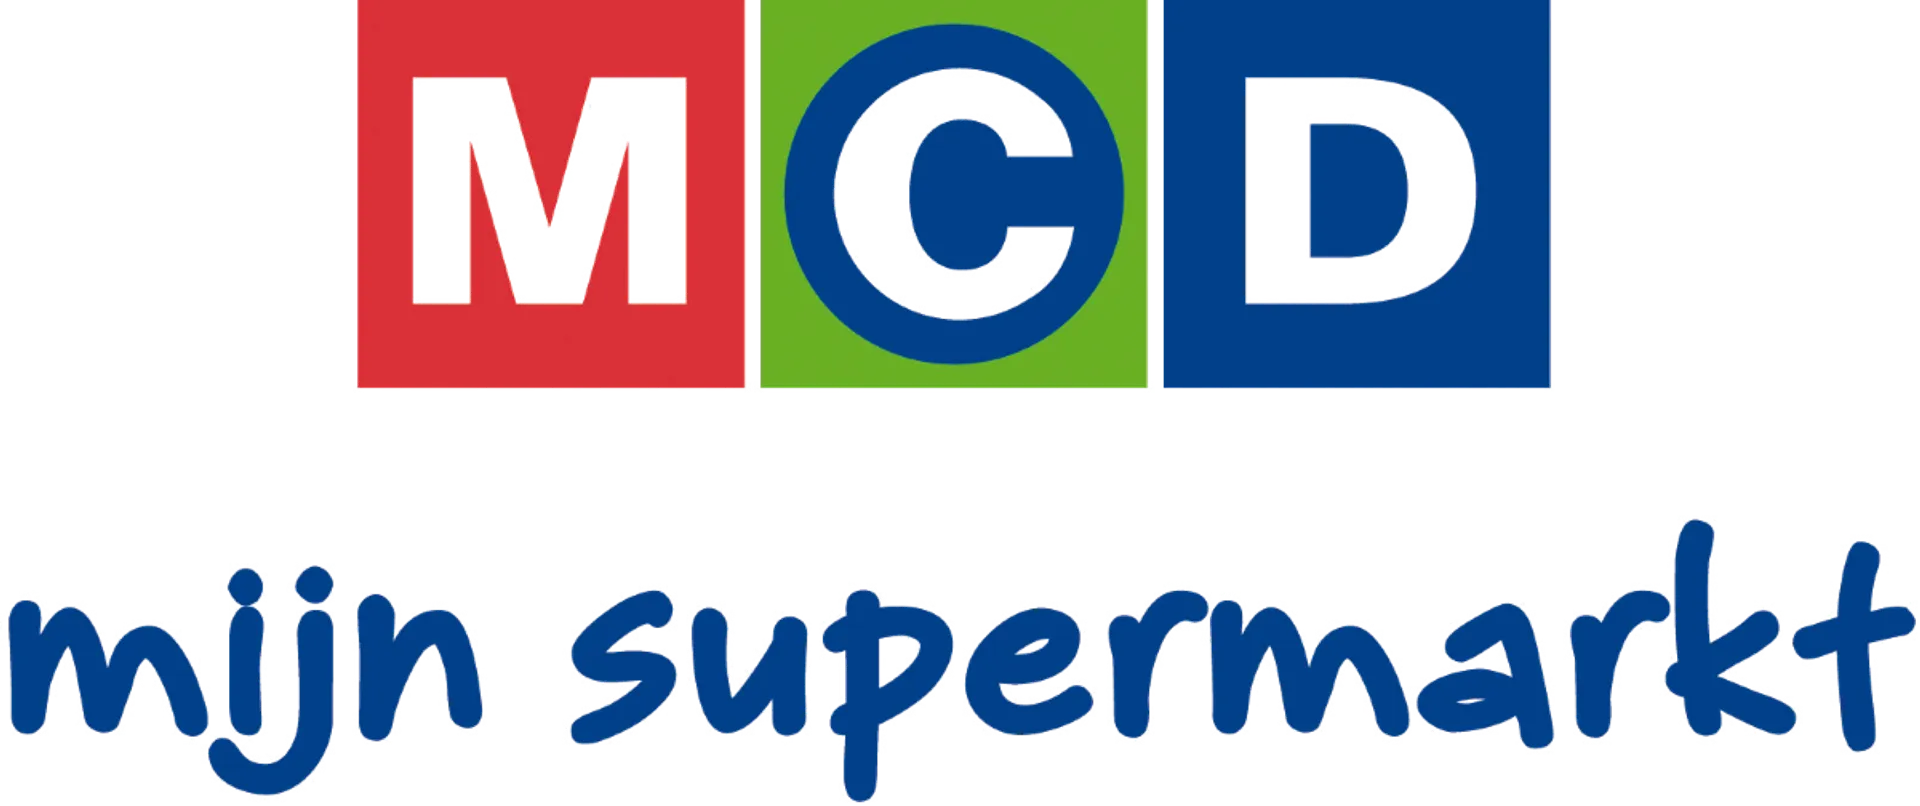 MCD SUPERMARKT logo